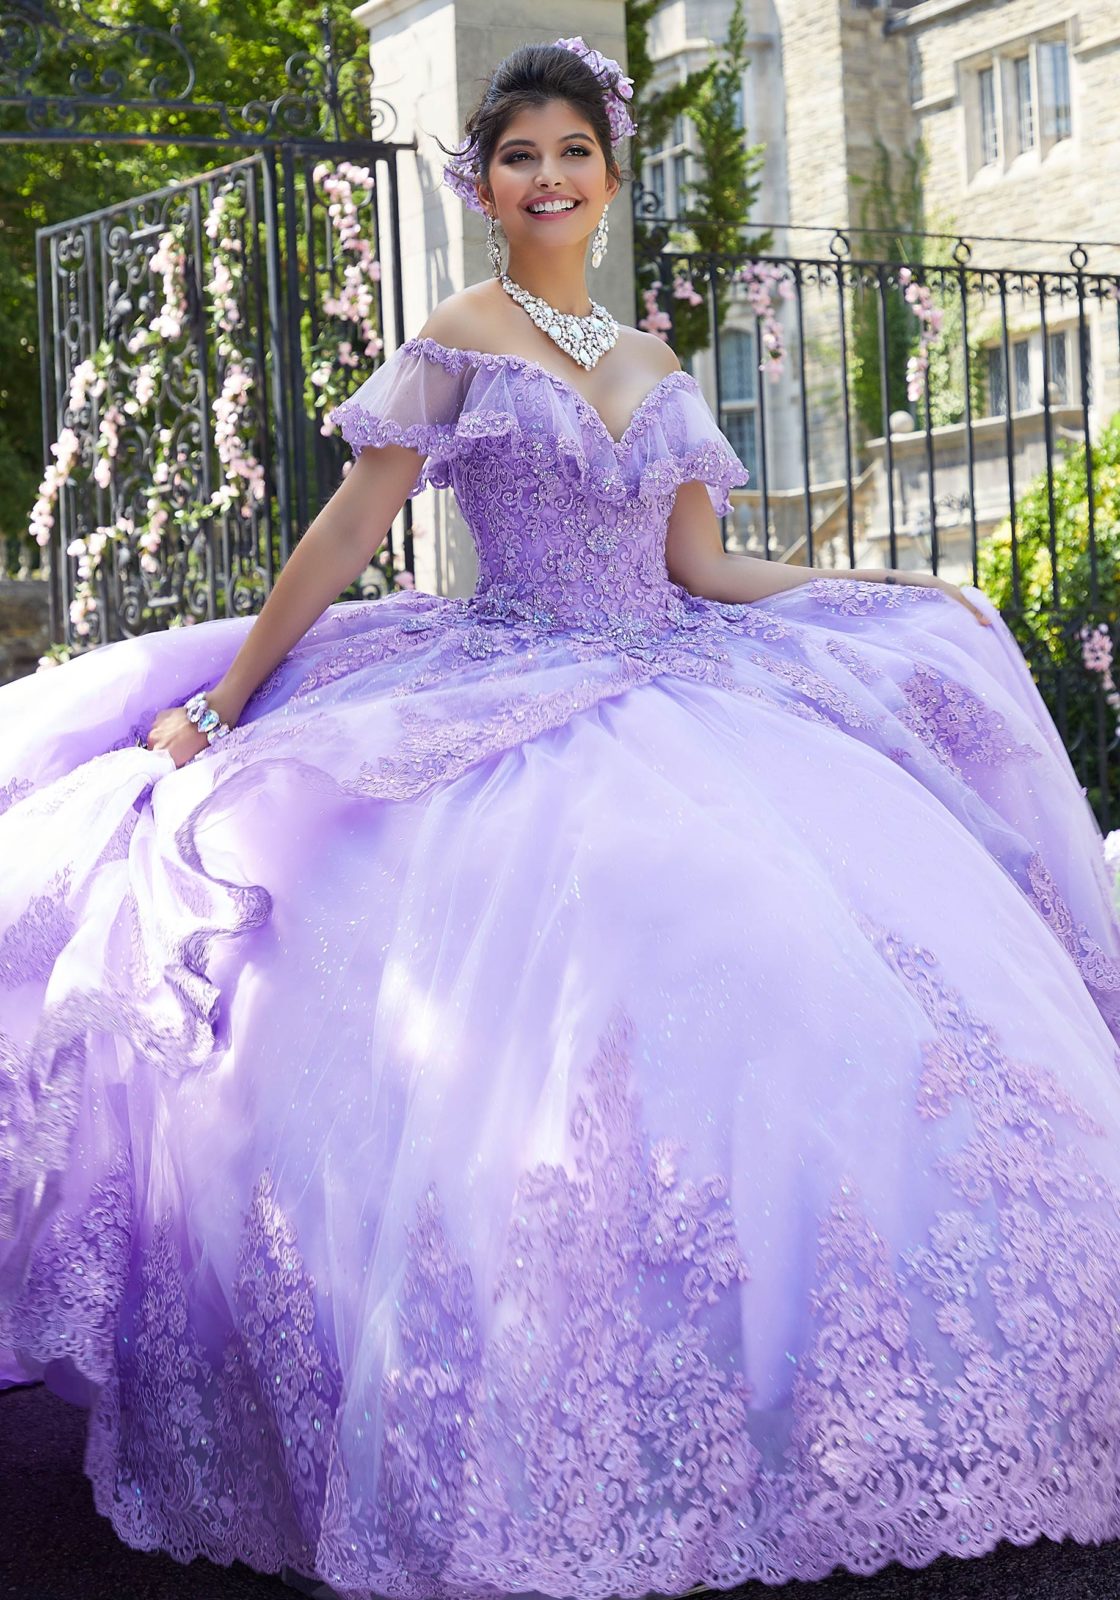 Princess Tulle and Glitter Tulle Quinceañera Dress #34025